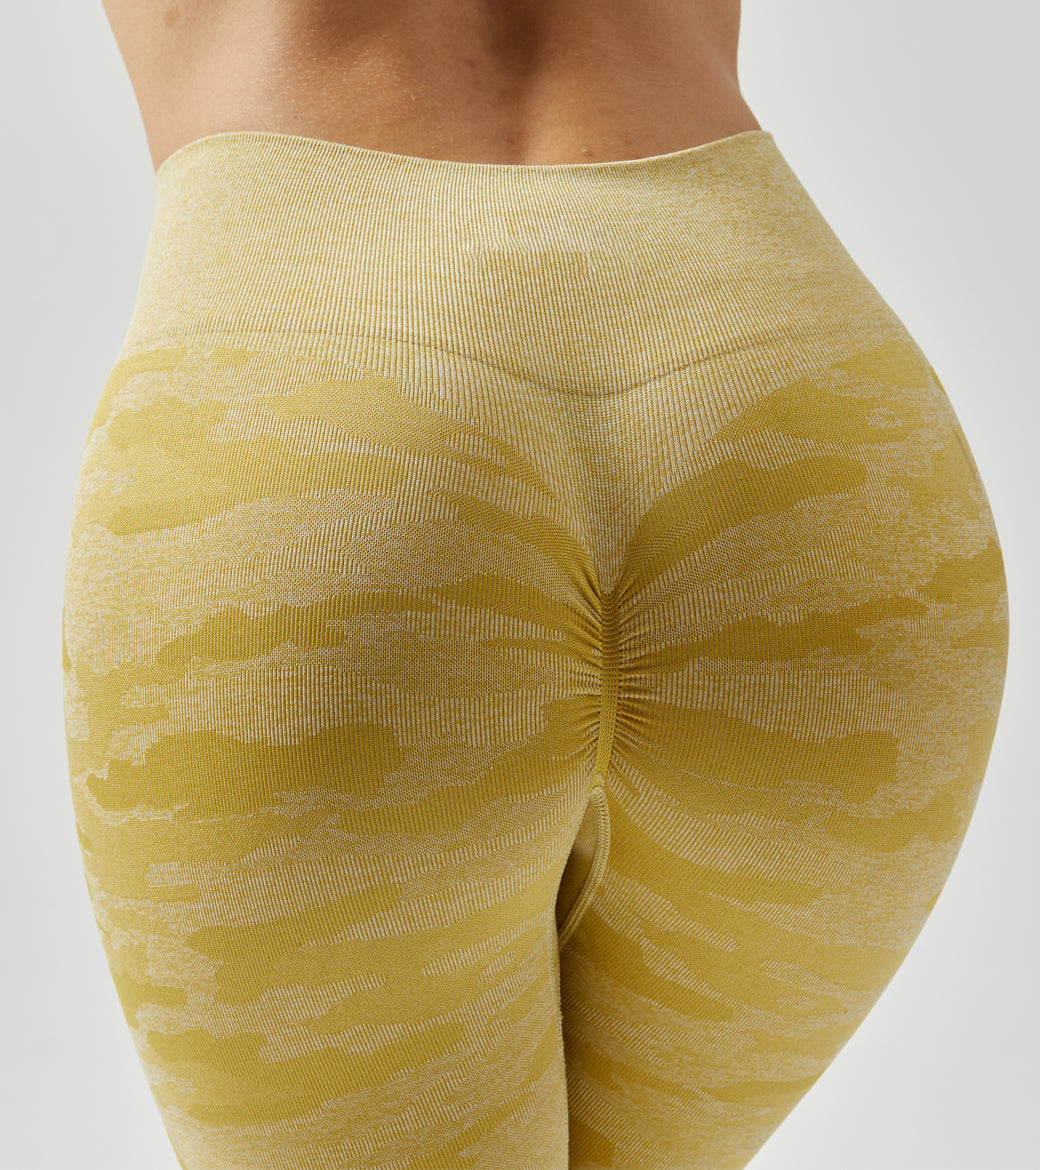 LOVESOFT Women's Yellow Camo Seamless Leggings High Waist Hip-lifting Pants